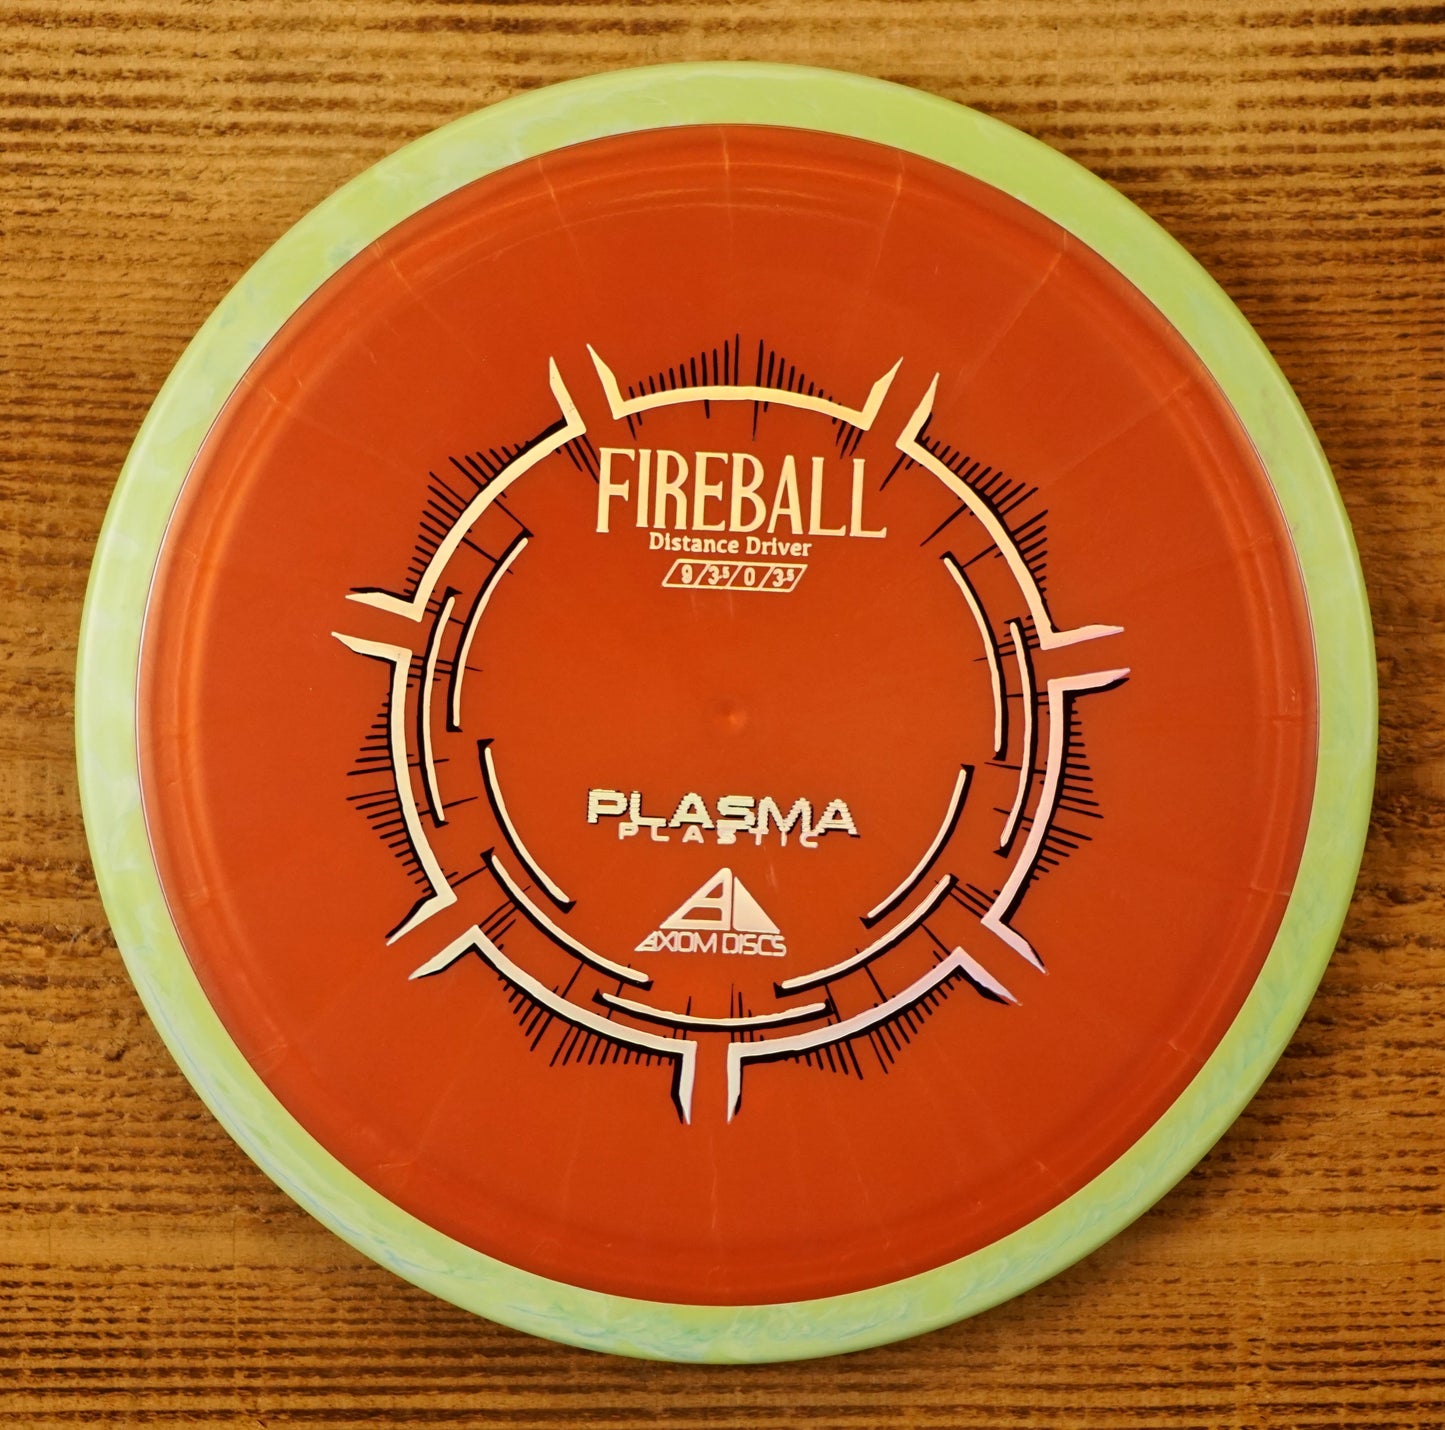 Plasma Fireball